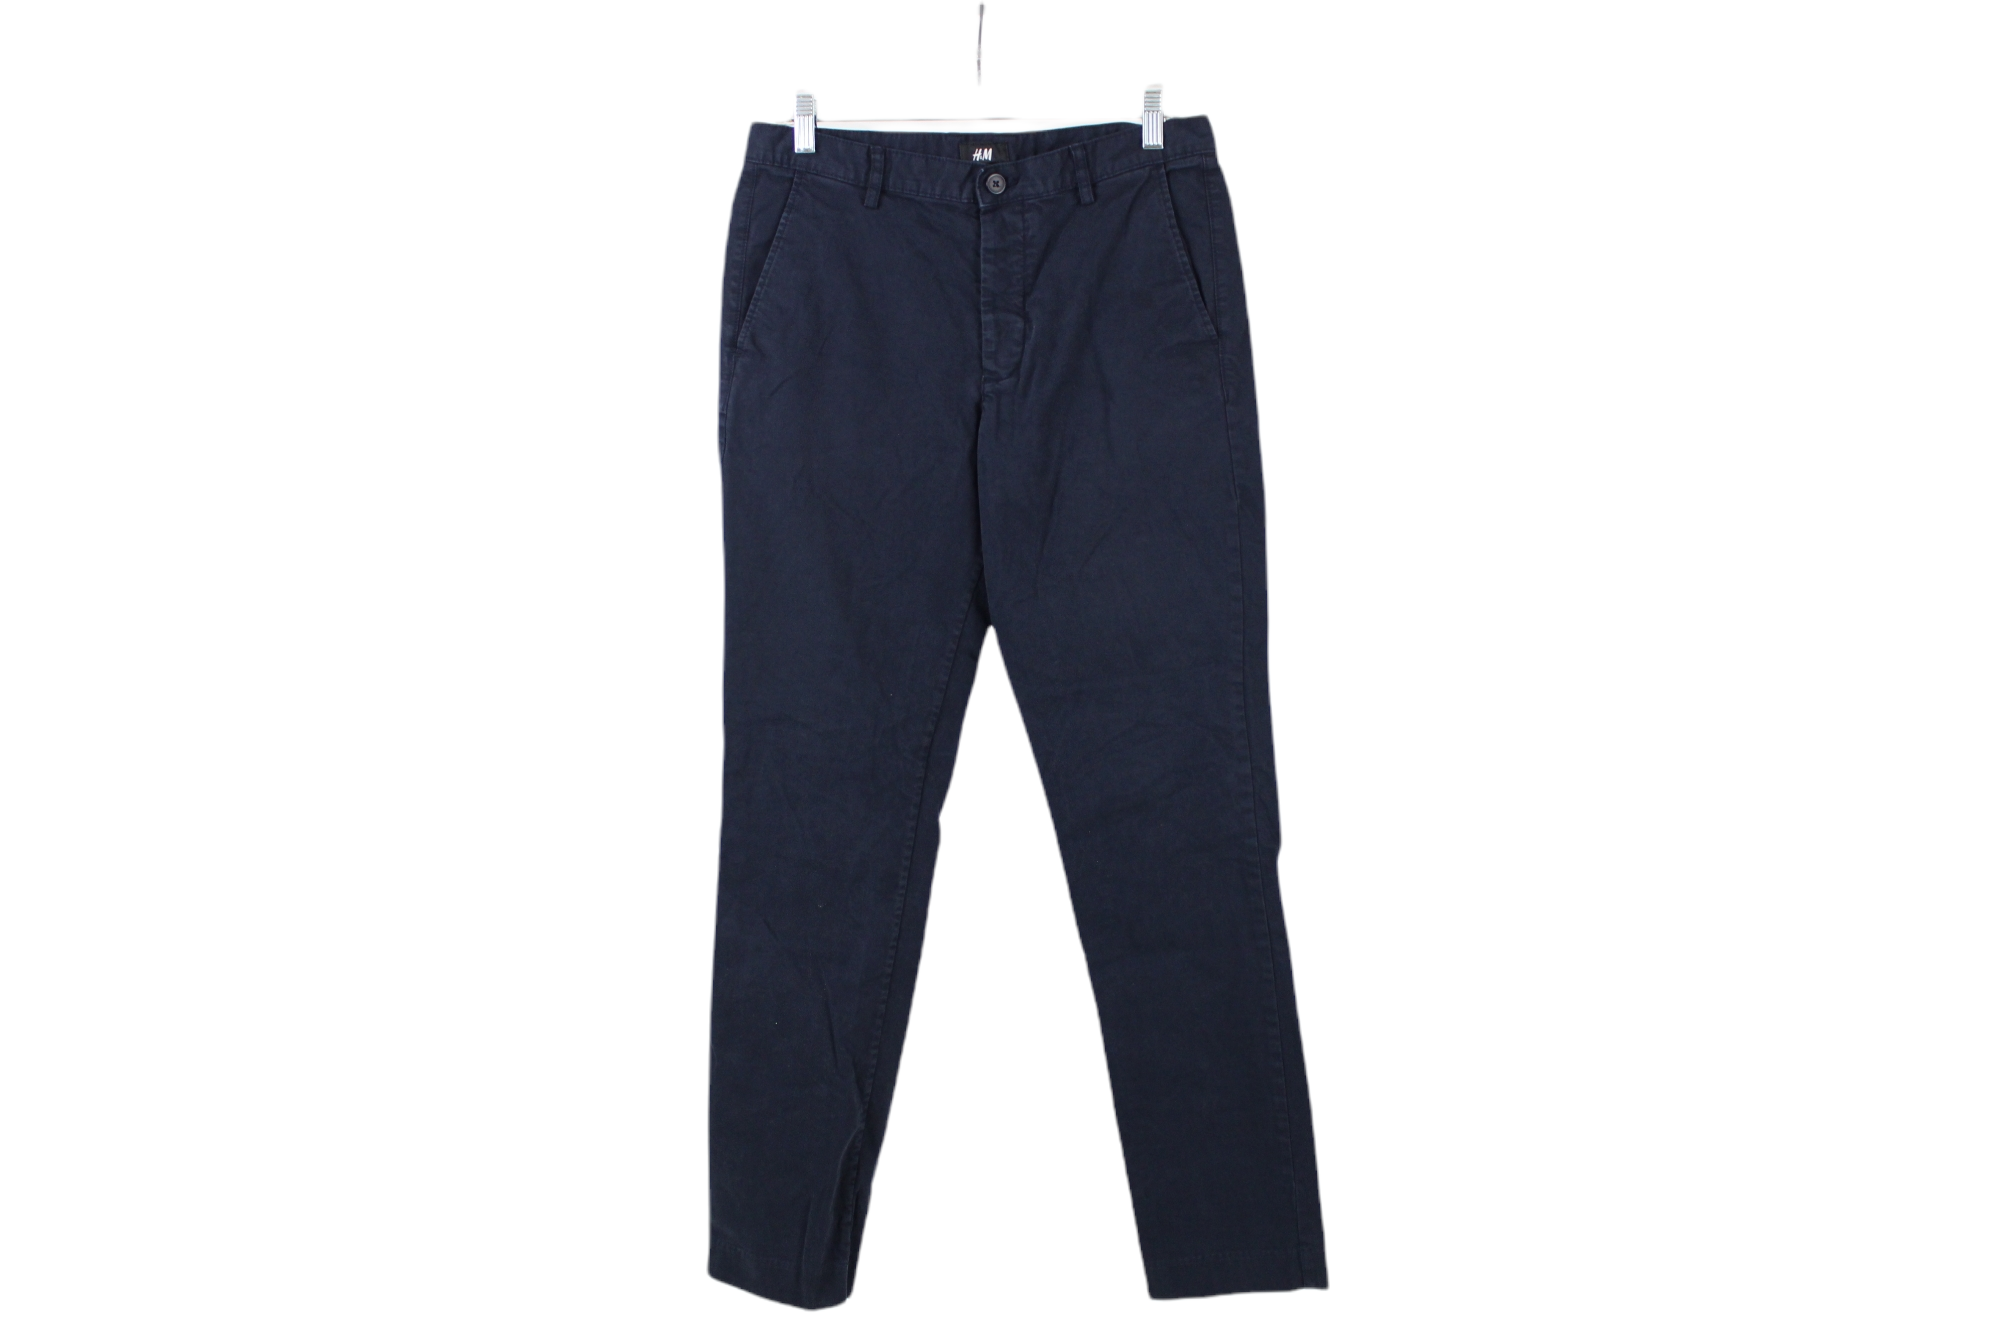 H&M Navy Blue Chino Pants | 33